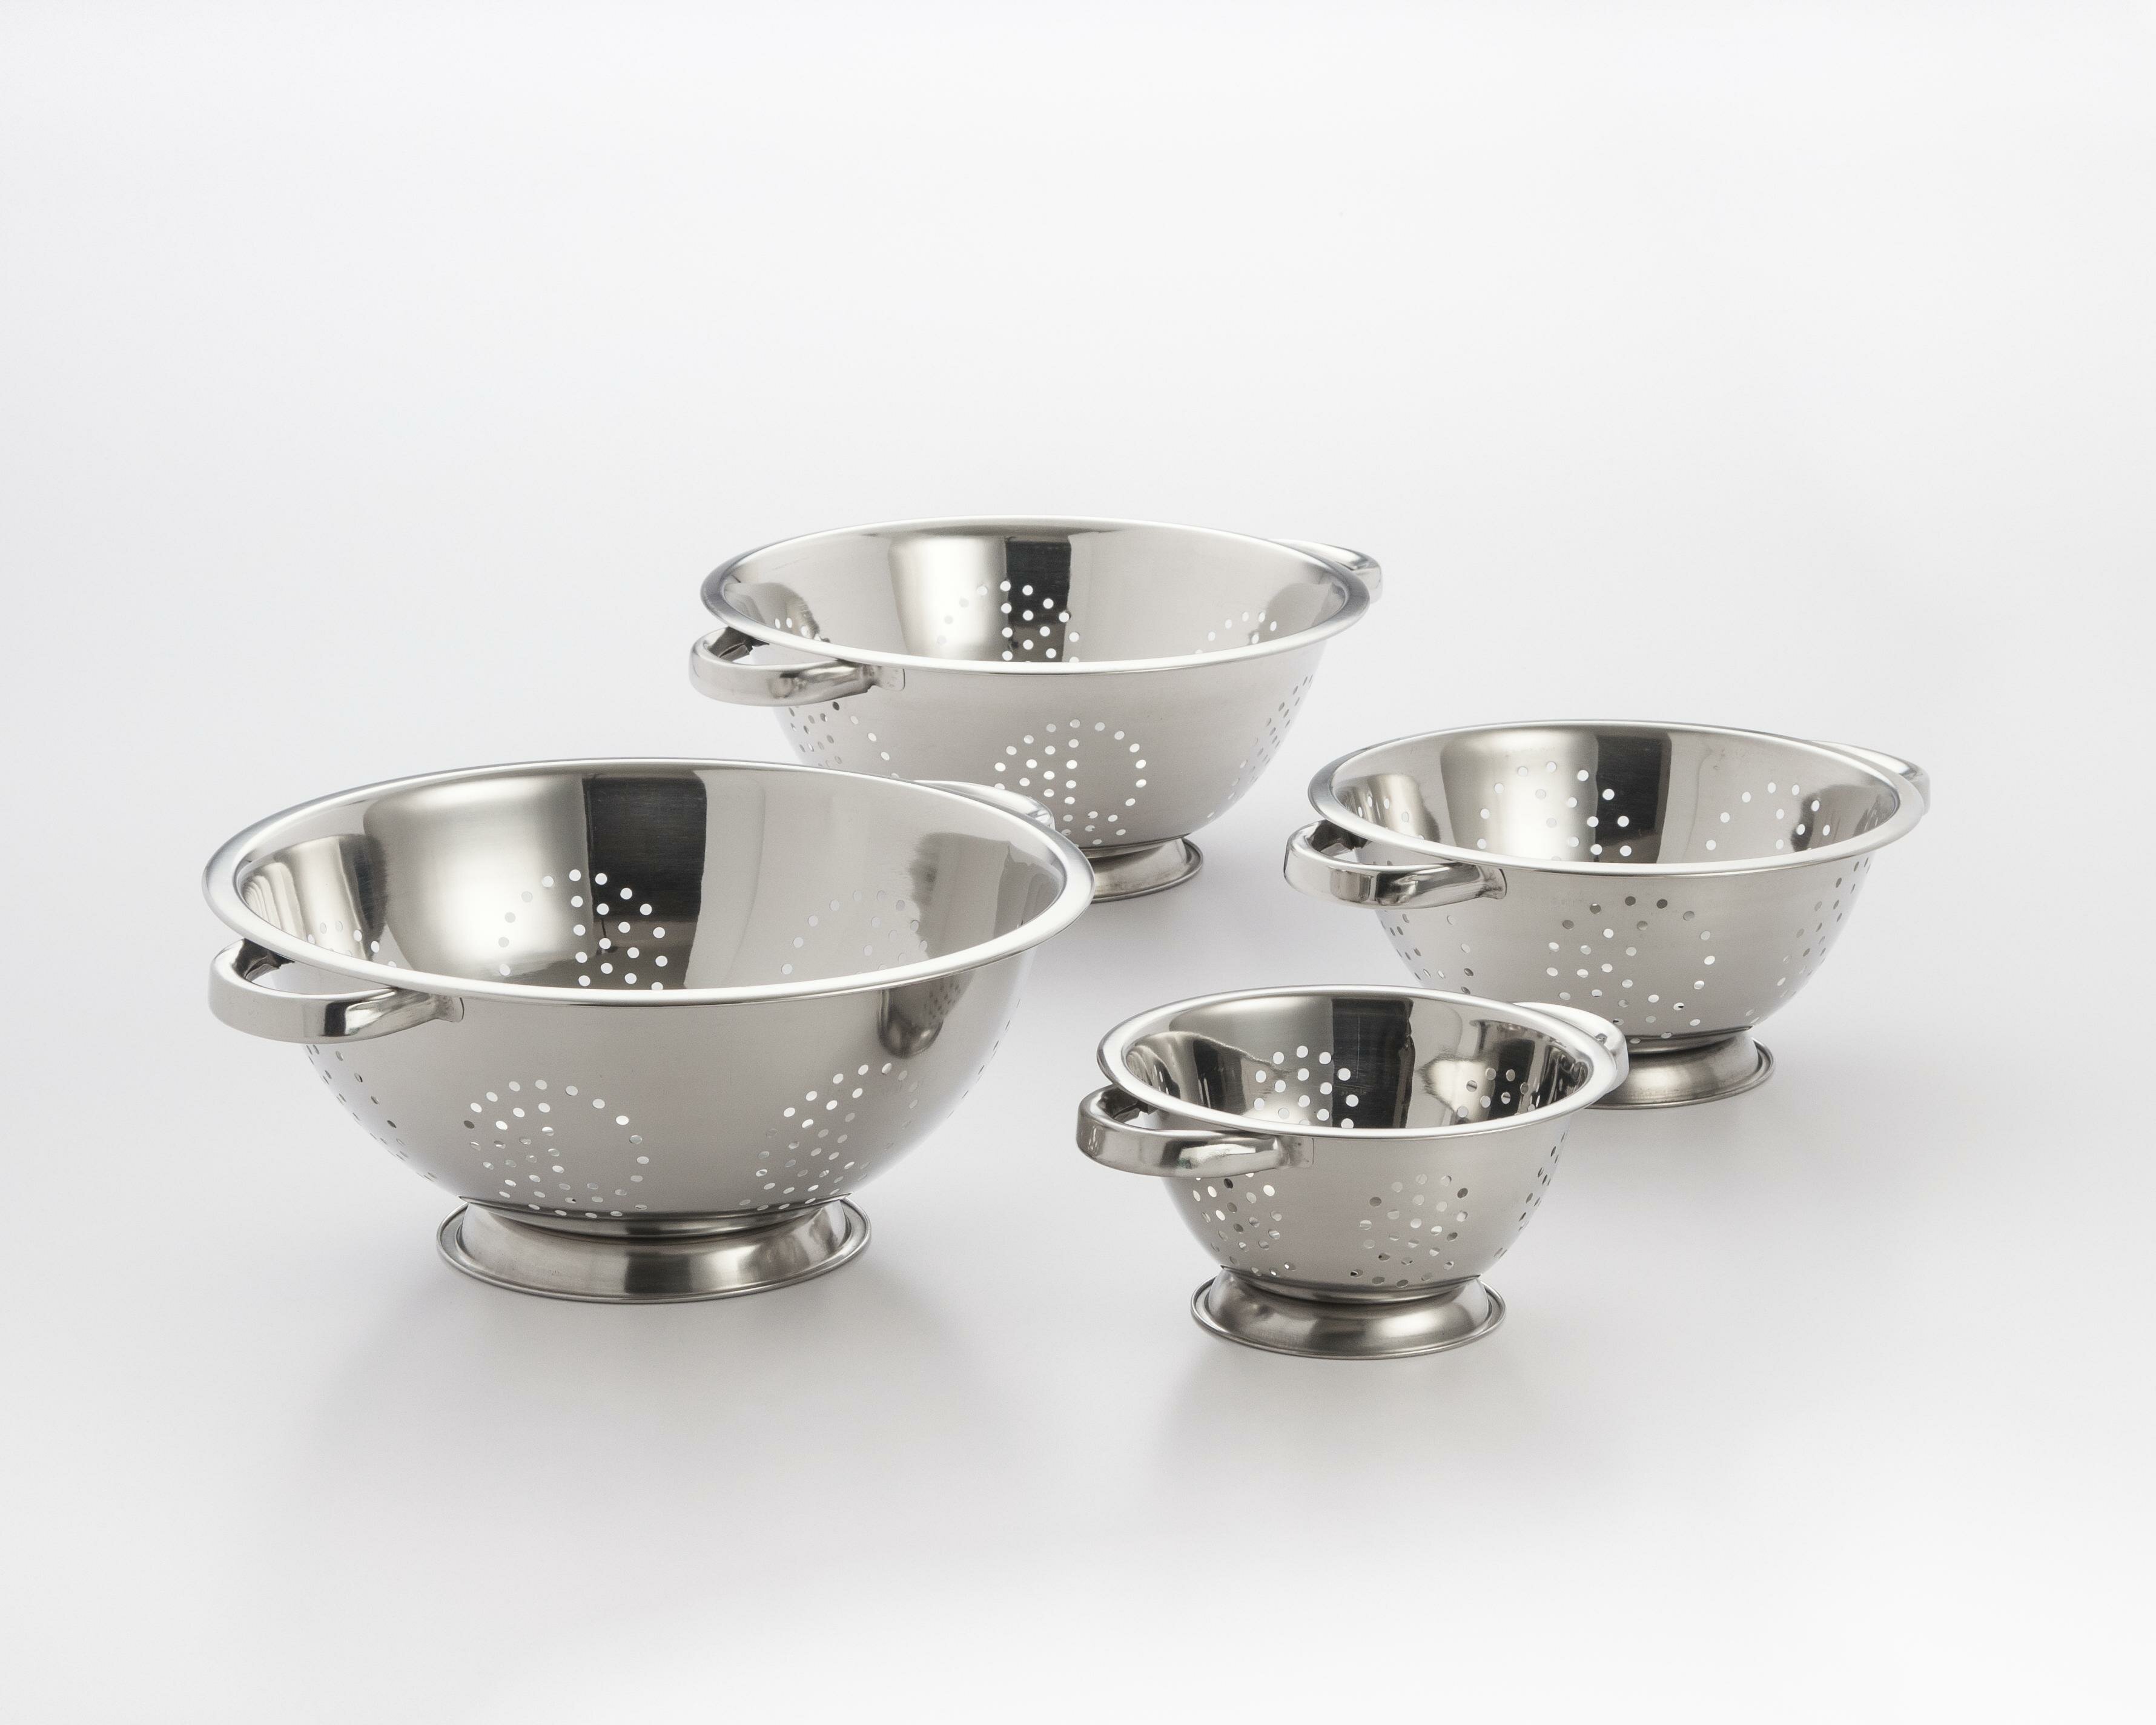 Huji Home Products. HUJI 3 Piece Stainless Steel Mixing Bowls Set